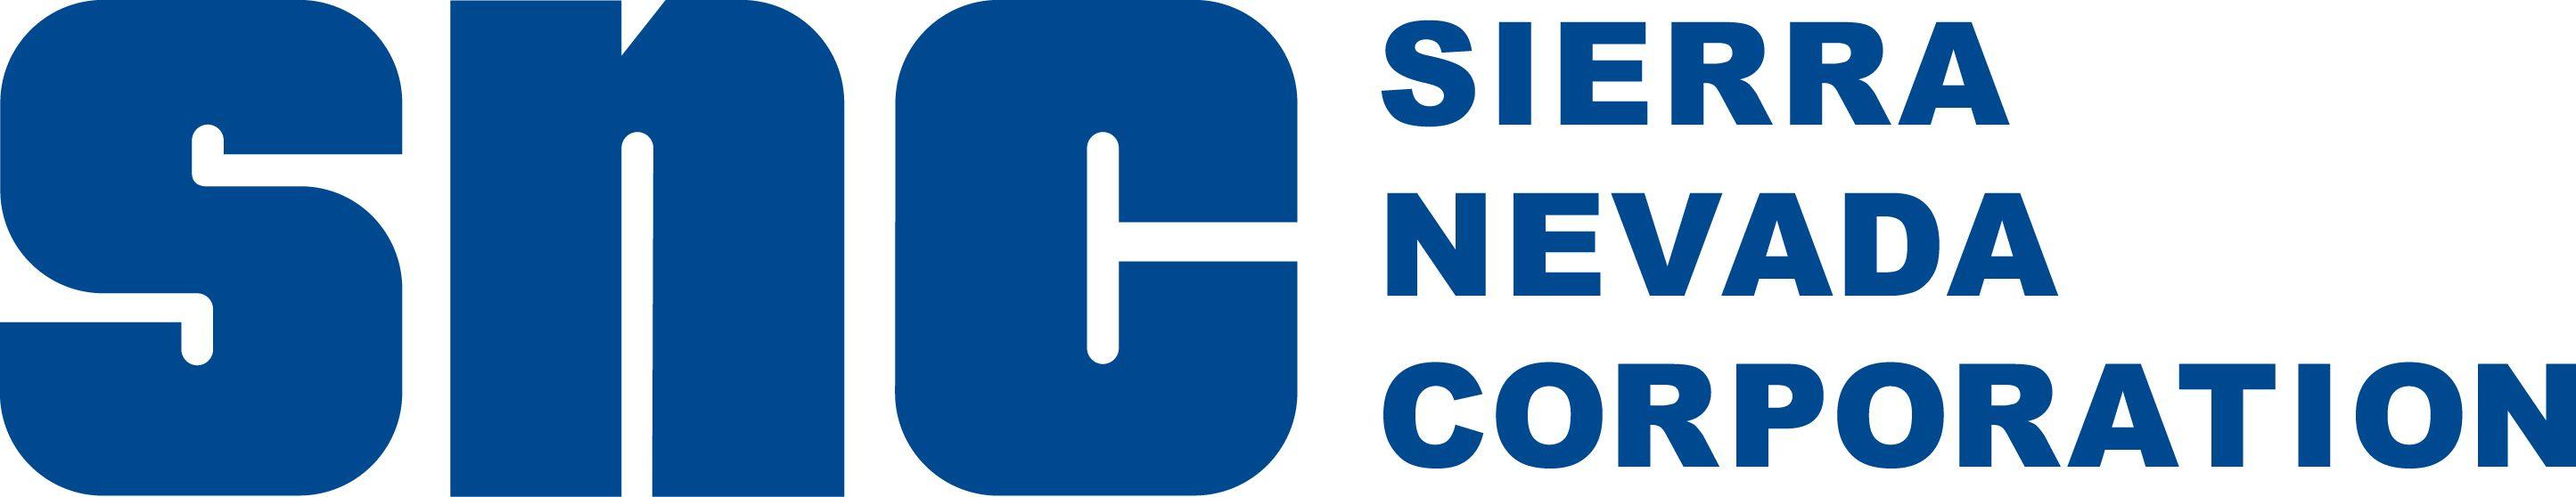 Serria Nevada Logo - Sierra nevada Logos